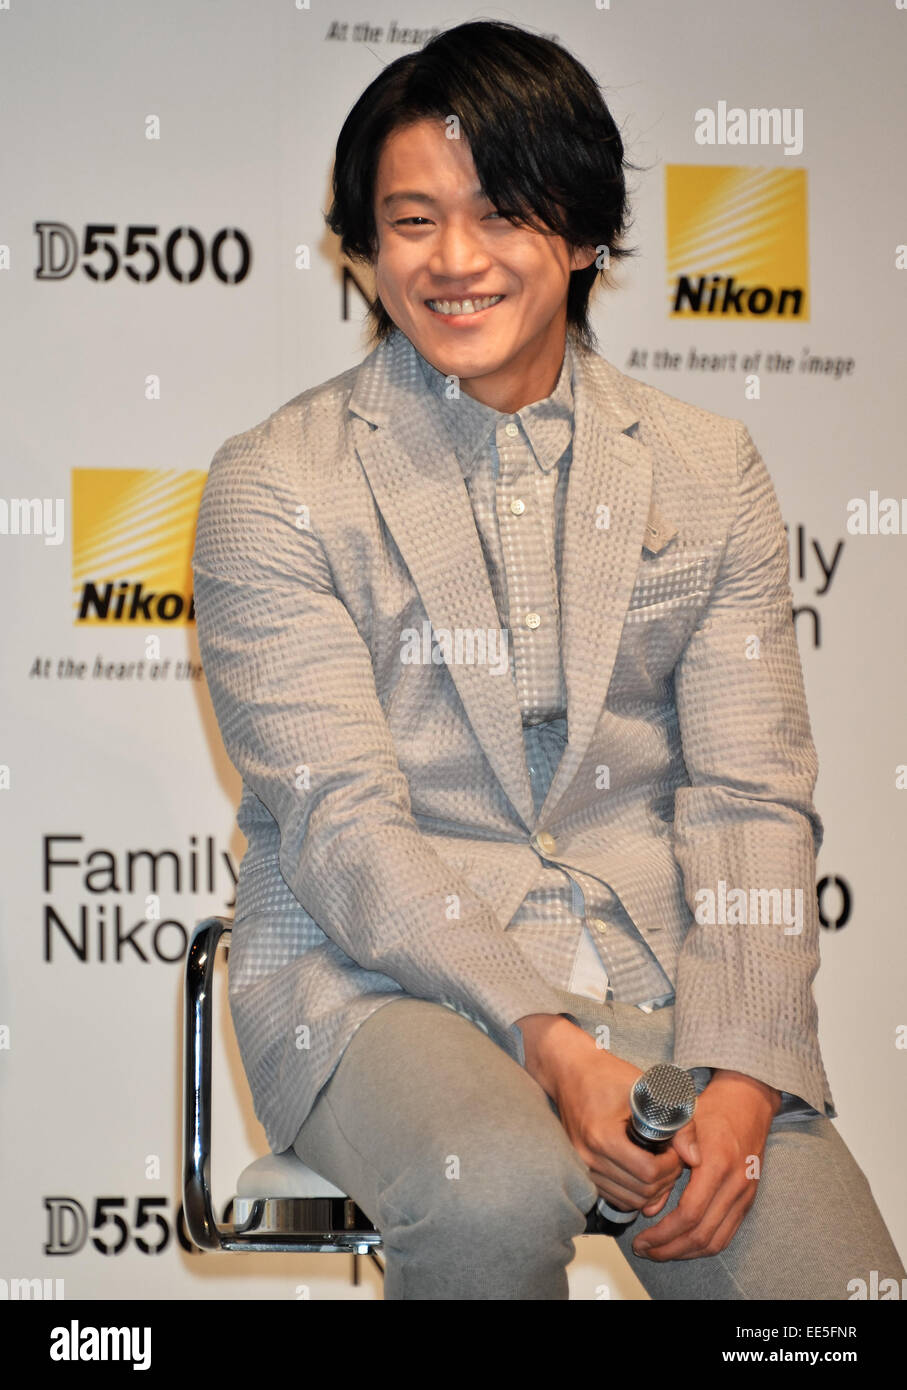 Shun Oguri, Jan 14, 2015 : Tokyo, Japan : Japanese actor Shun Oguri